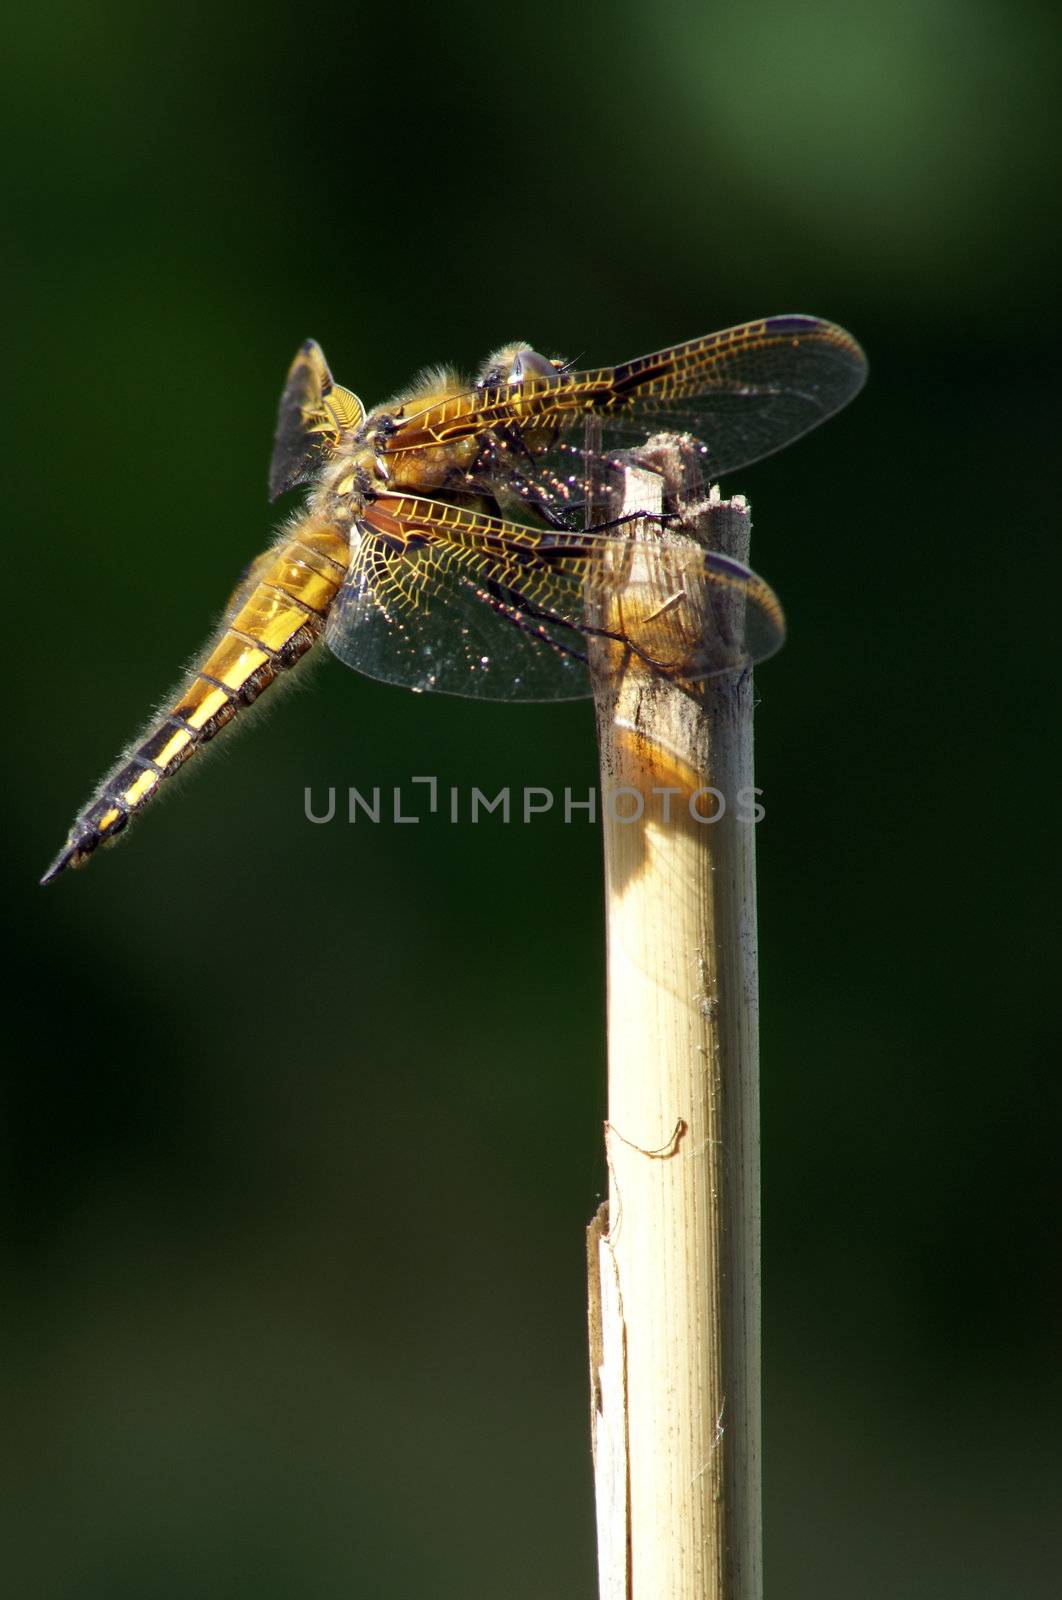 Closeup of a coy dragonfly taking a sunbath.